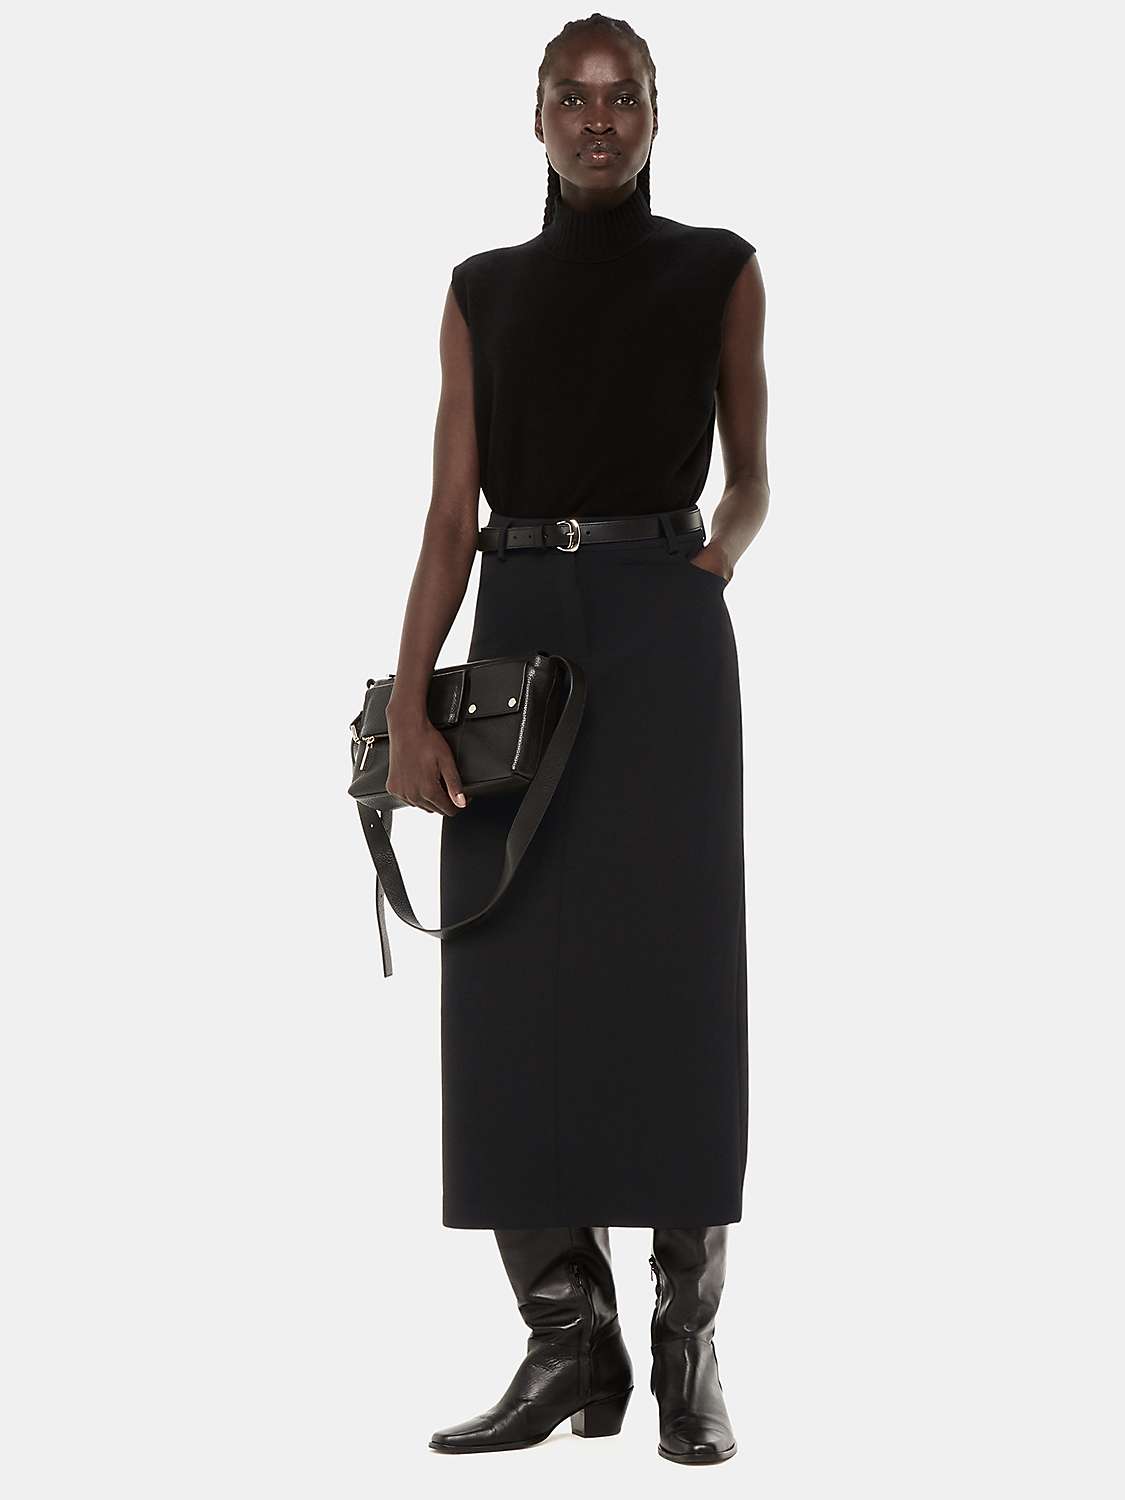 Whistles Petite Abigail Tailored Midi Skirt, Black at John Lewis & Partners